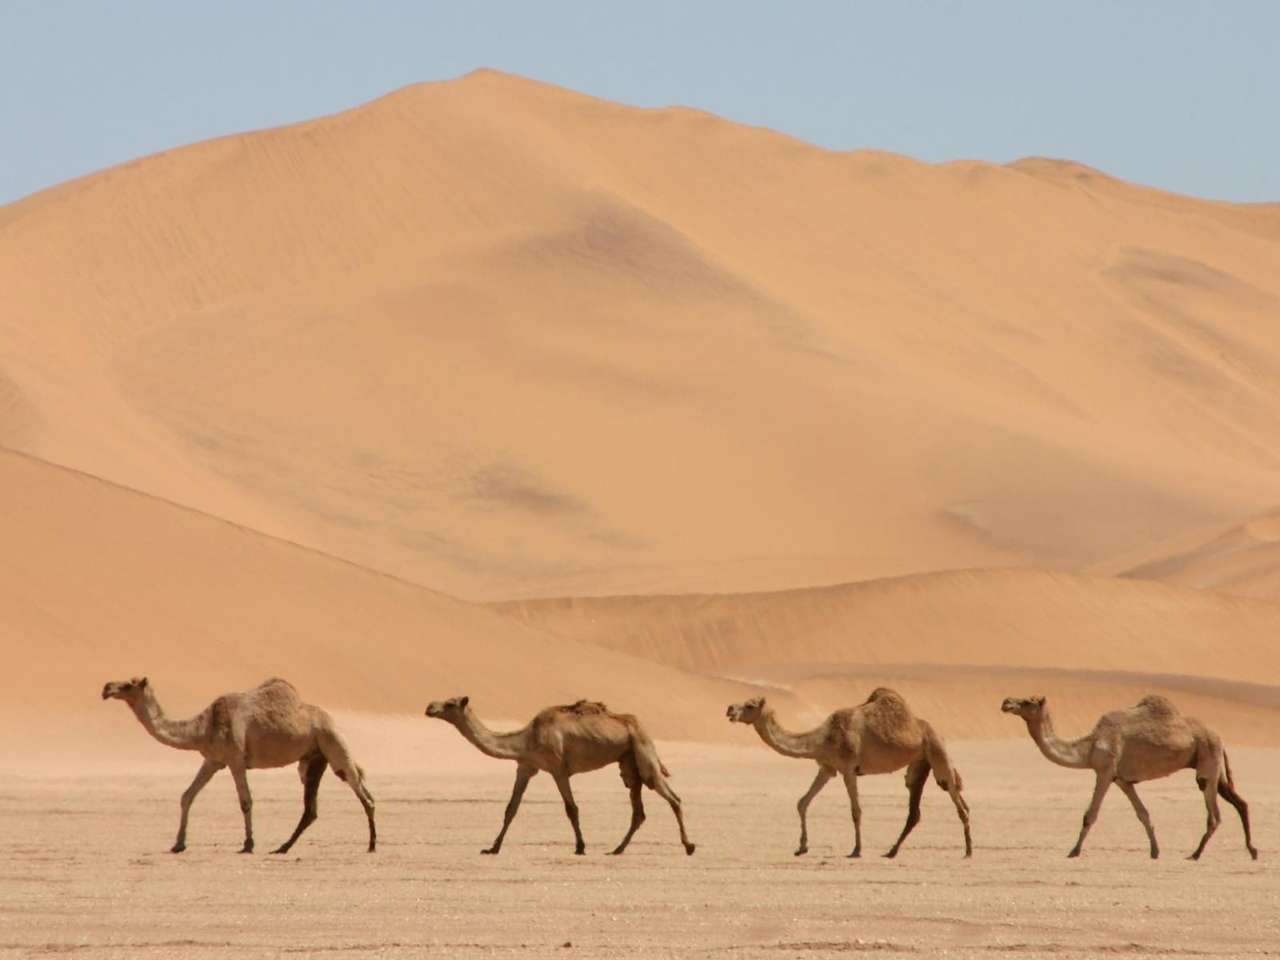 Su camello puzzle online a partir de foto